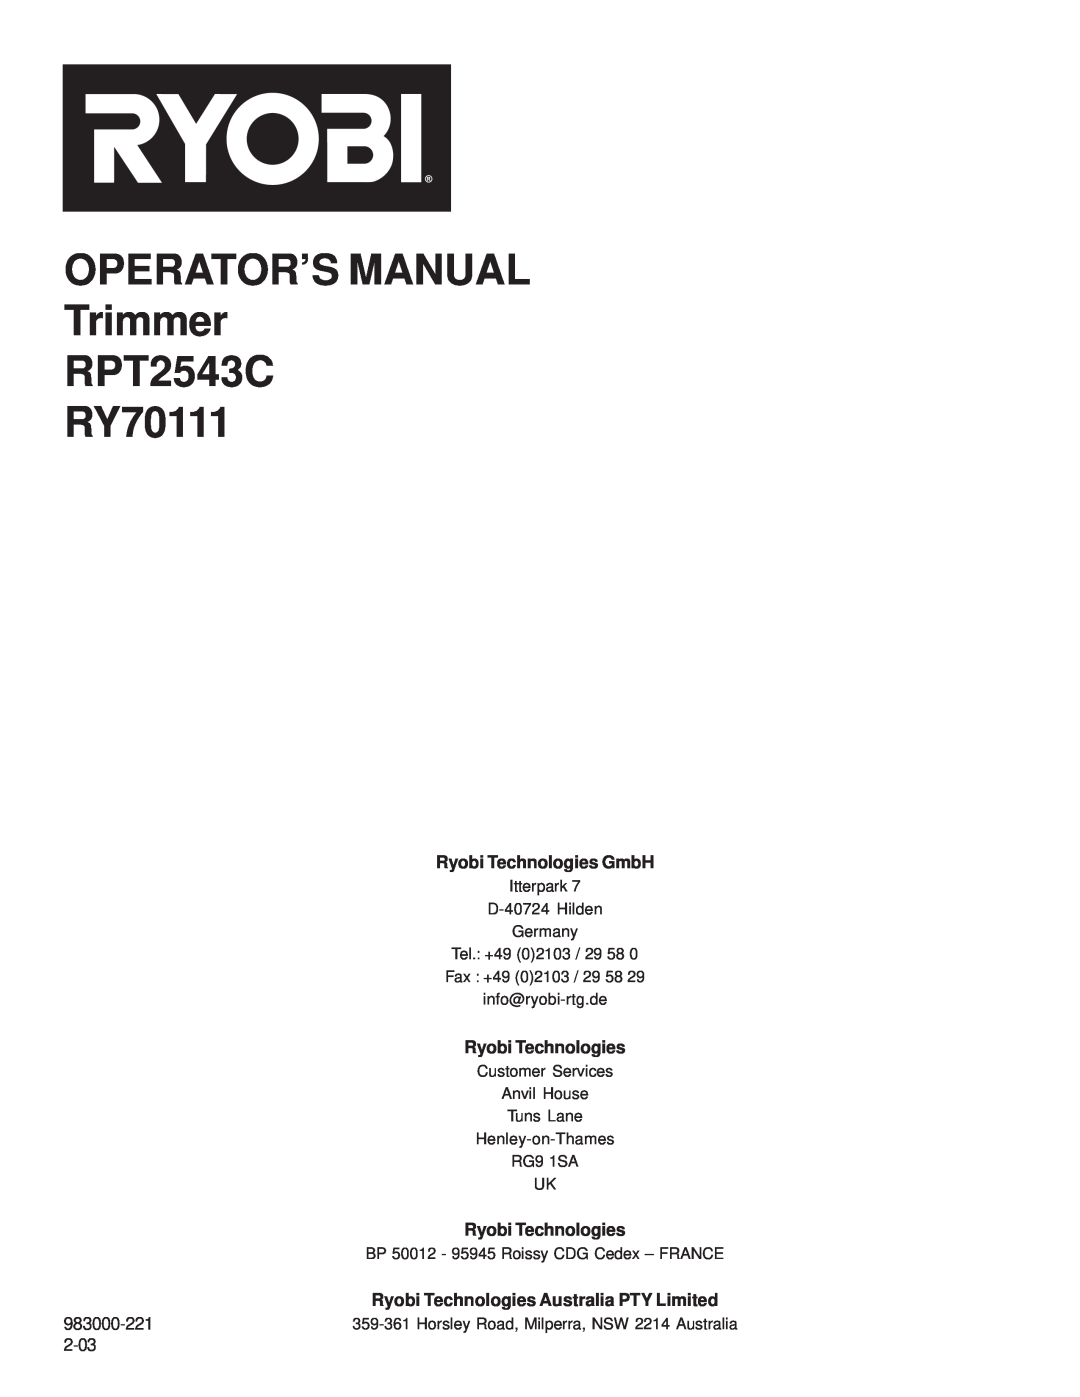 Ryobi Outdoor RPT2543C, RY7011 manual Ryobi Technologies GmbH, OPERATOR’S MANUAL Trimmer RPT2543C RY70111 